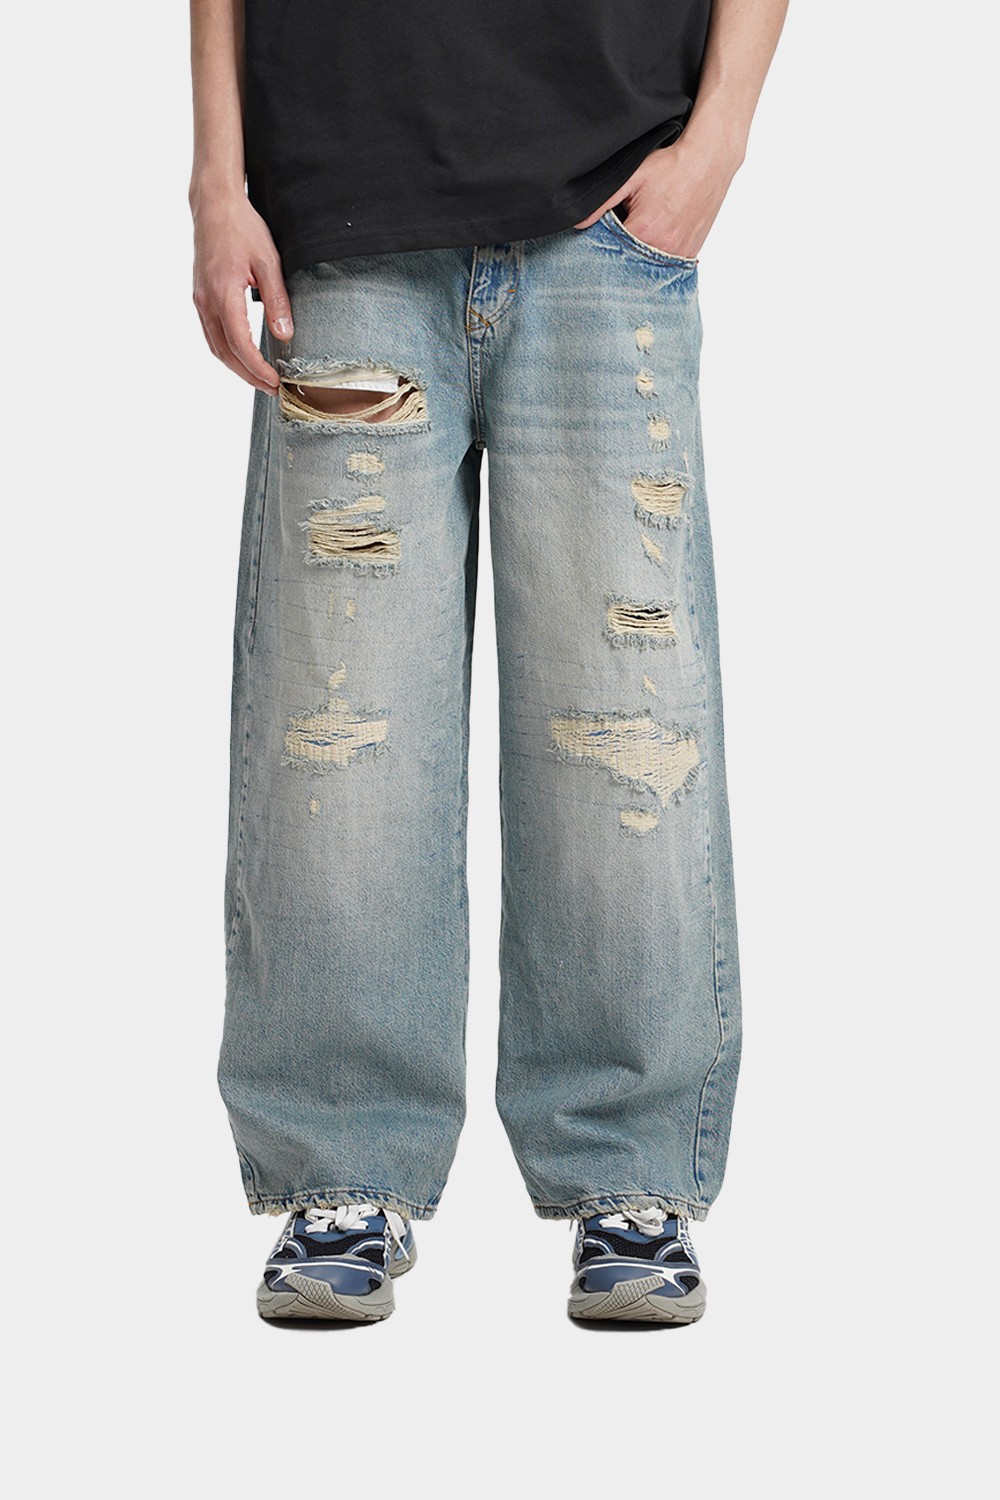 Vintage Rip Jaya Baggy Jeans (URBN-B-221)